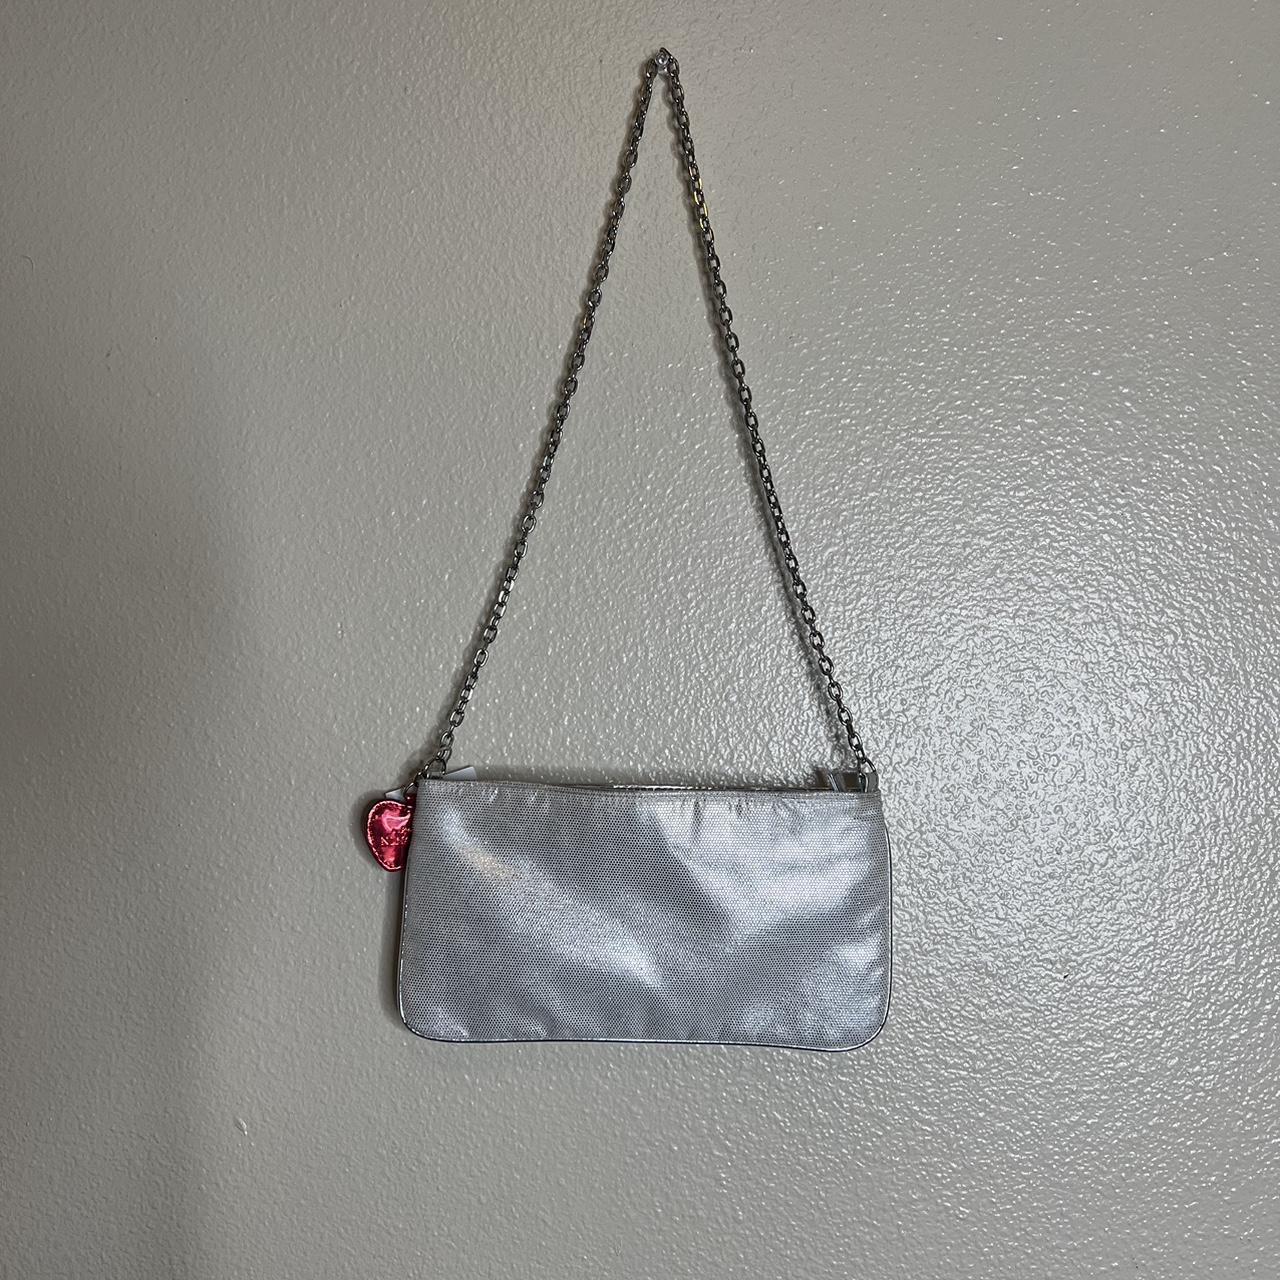 Nina Ricci Women's Silver and White Bag